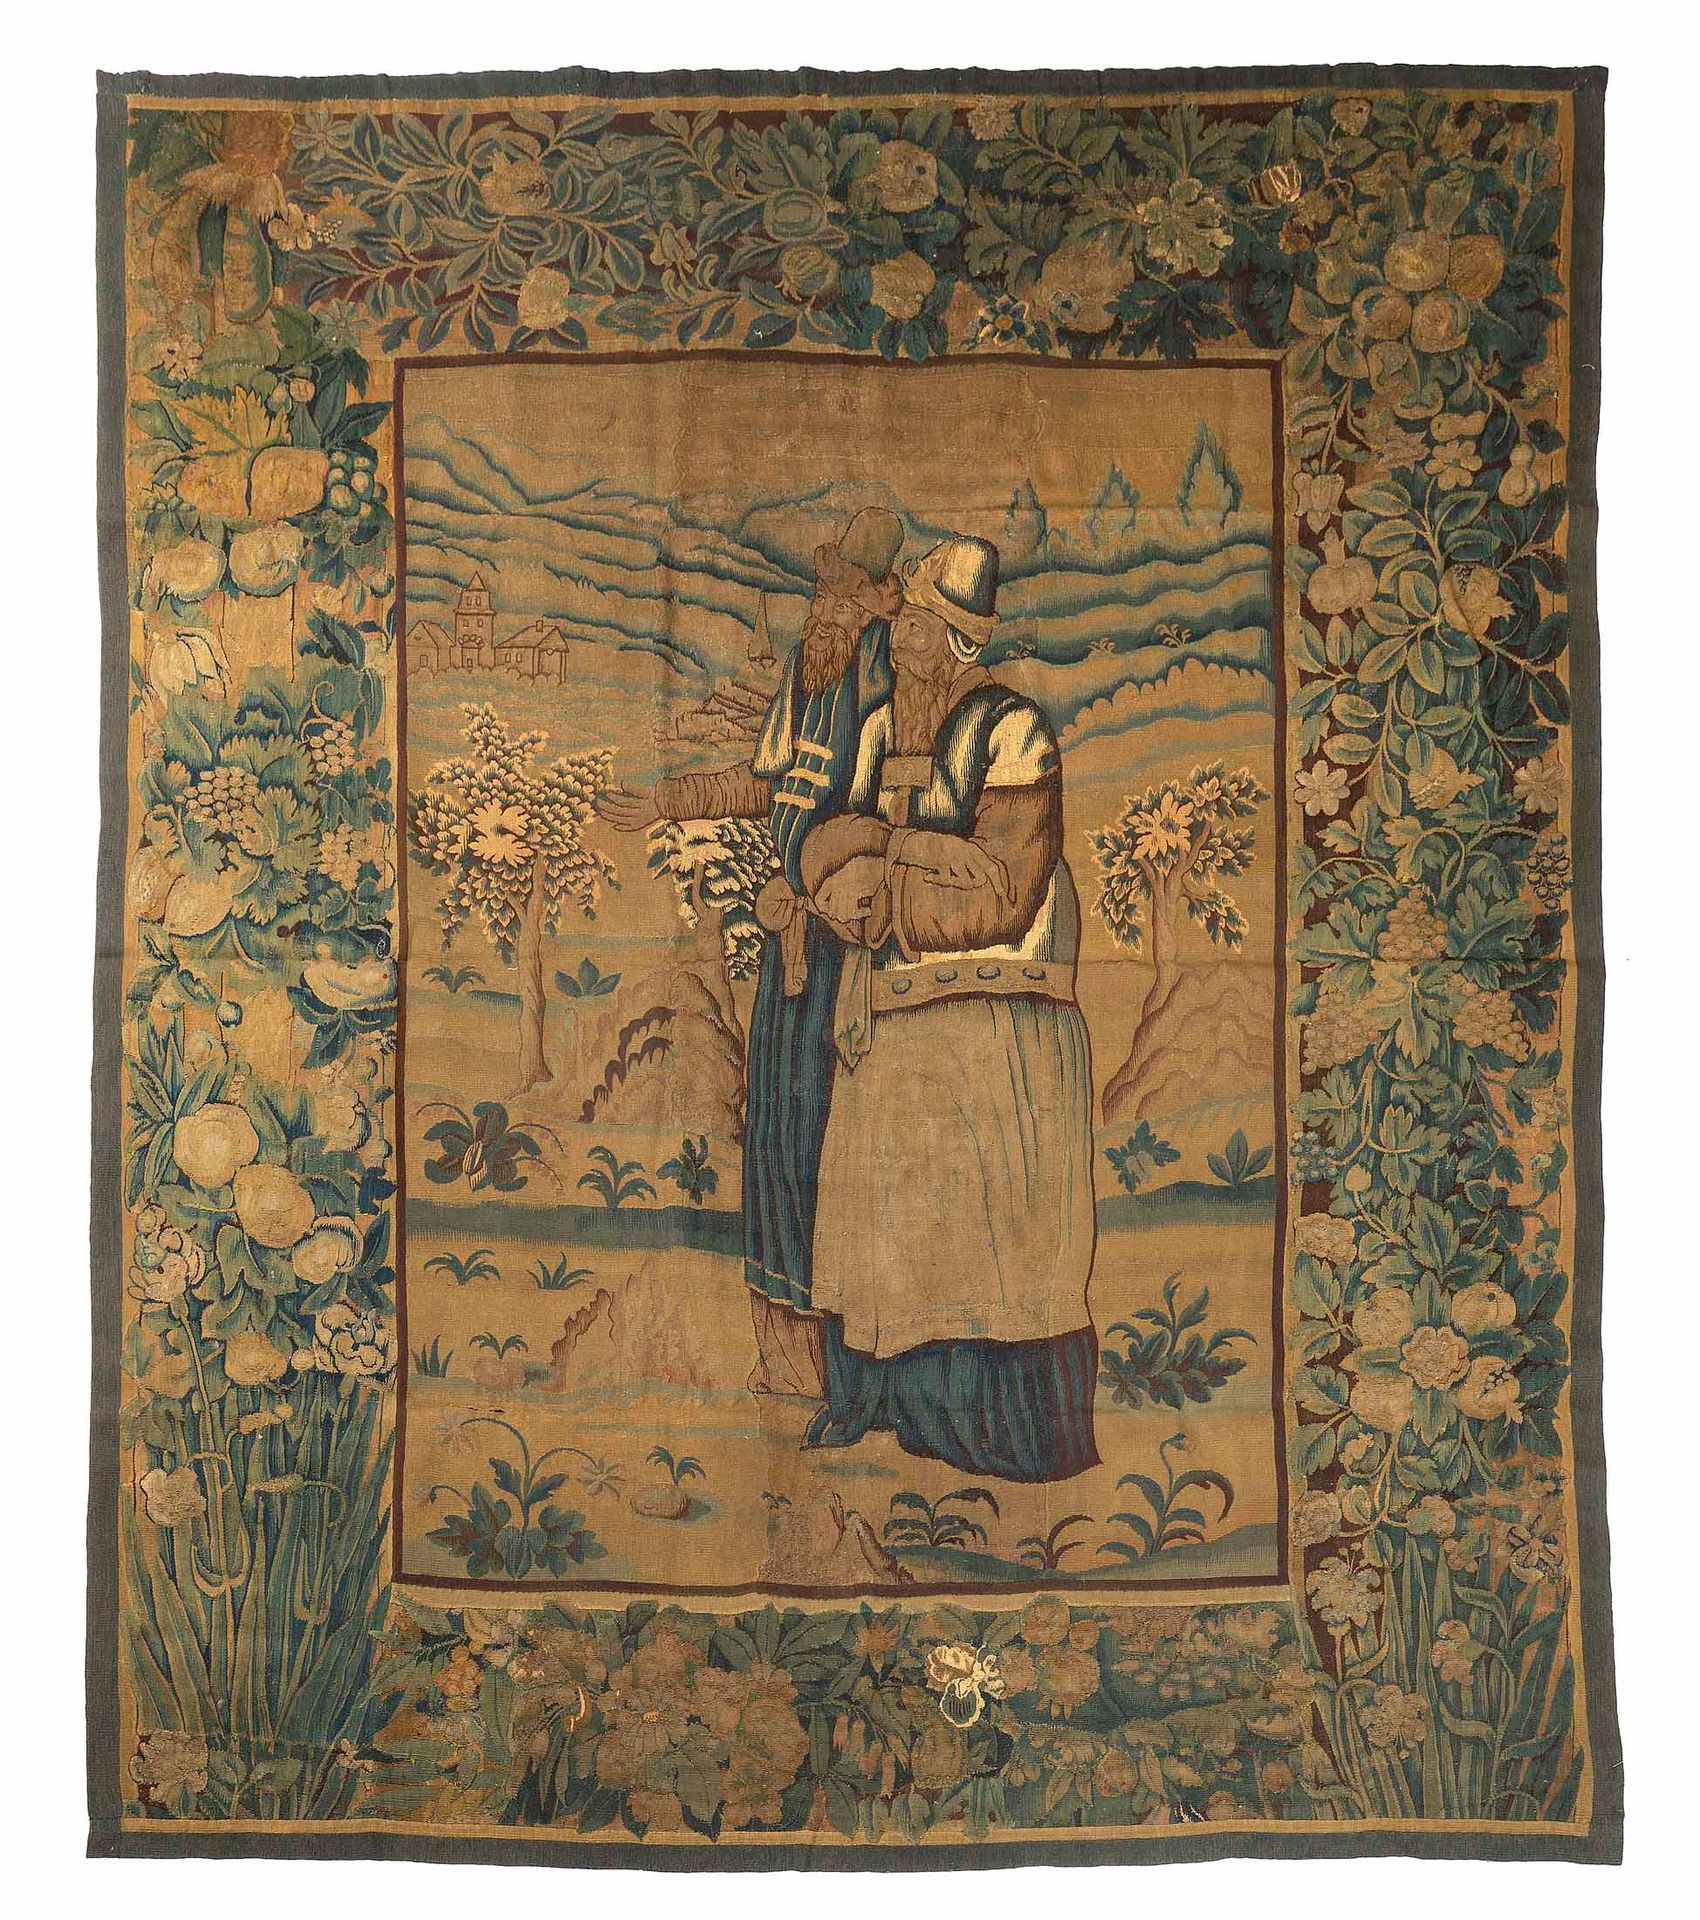 Null 佛兰德斯的挂毯，16世纪

技术特点 : 羊毛和丝绸

尺寸：高度：265厘米；宽度：210厘米

在一片丘陵地带，鲜花盛开，树木轻盈，可以看到建筑物&hellip;